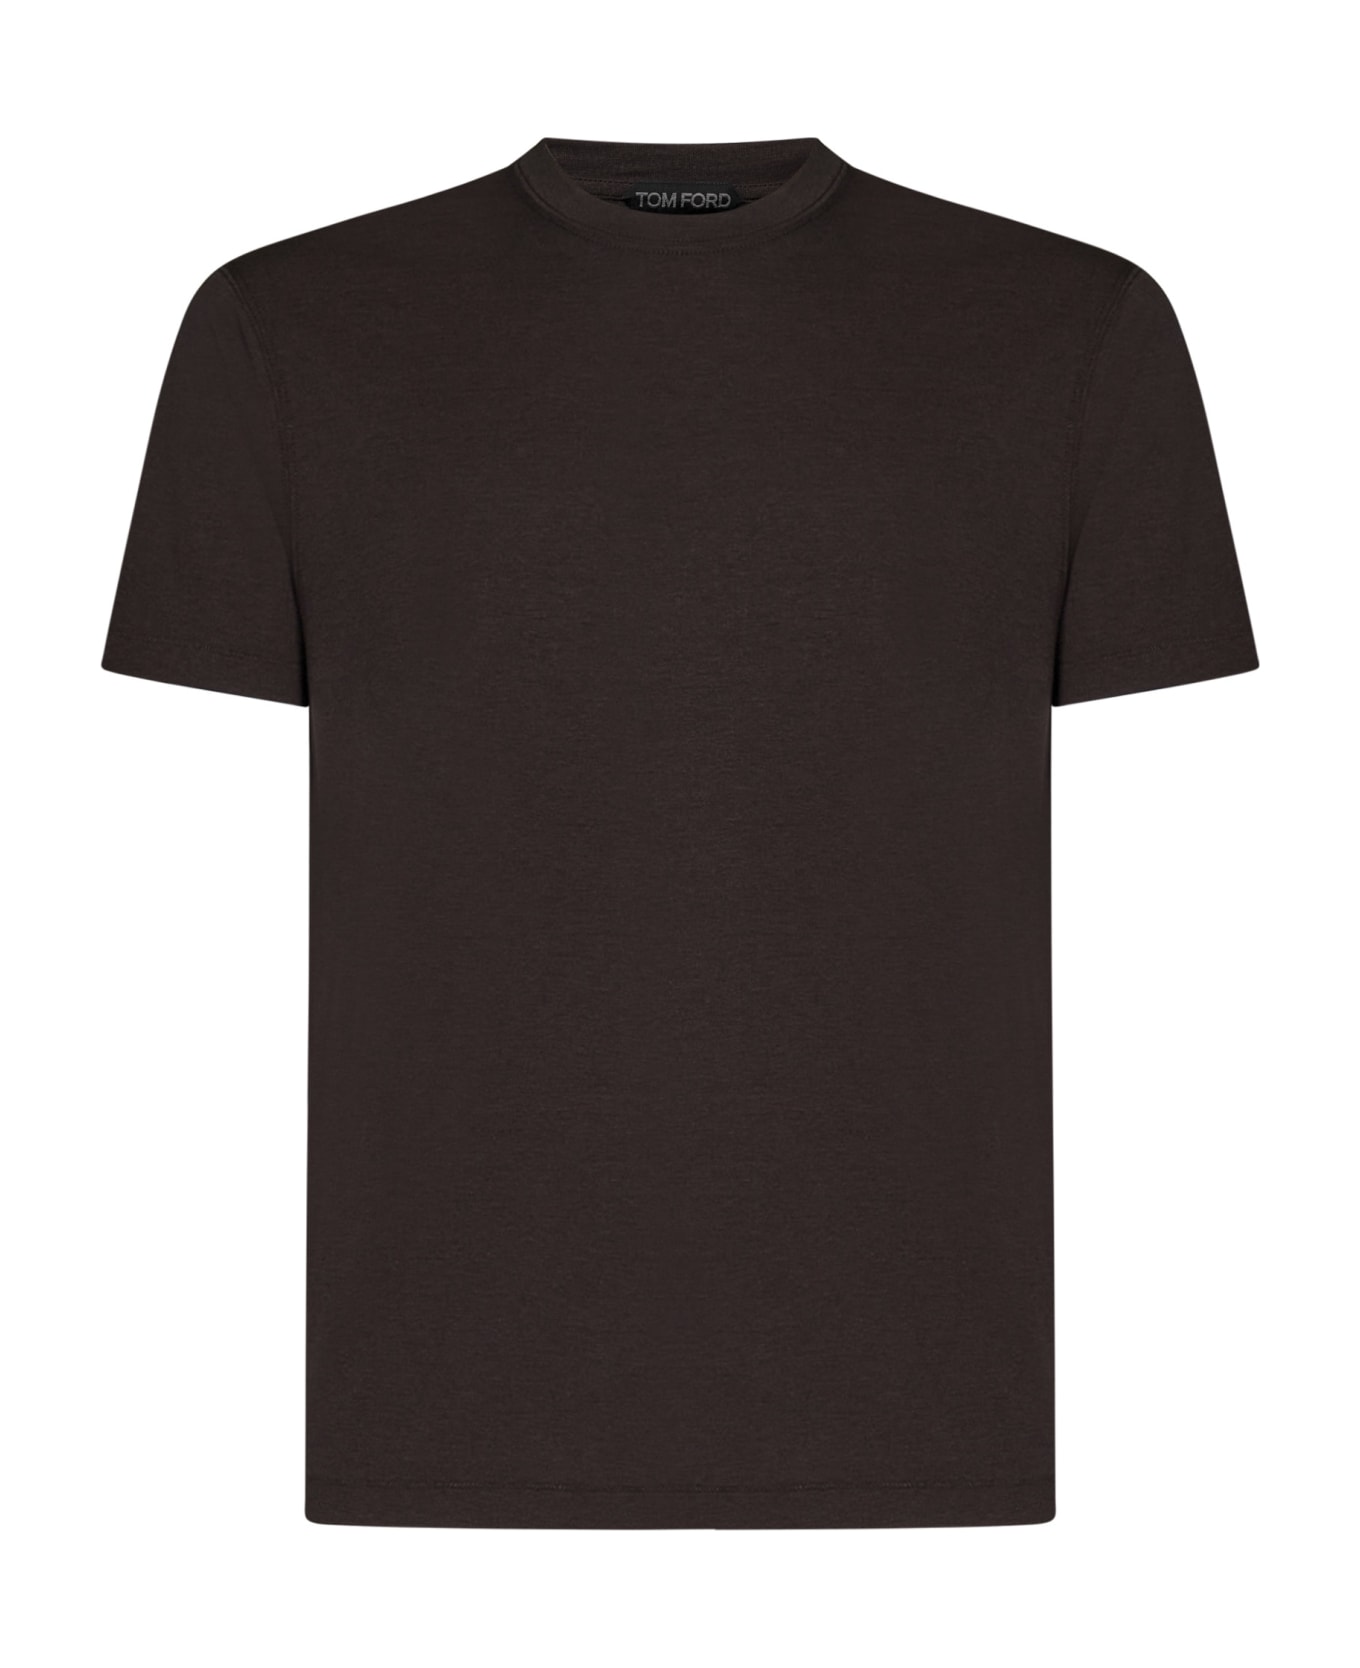 Tom Ford T-shirt - DARK CHOCOLATE シャツ